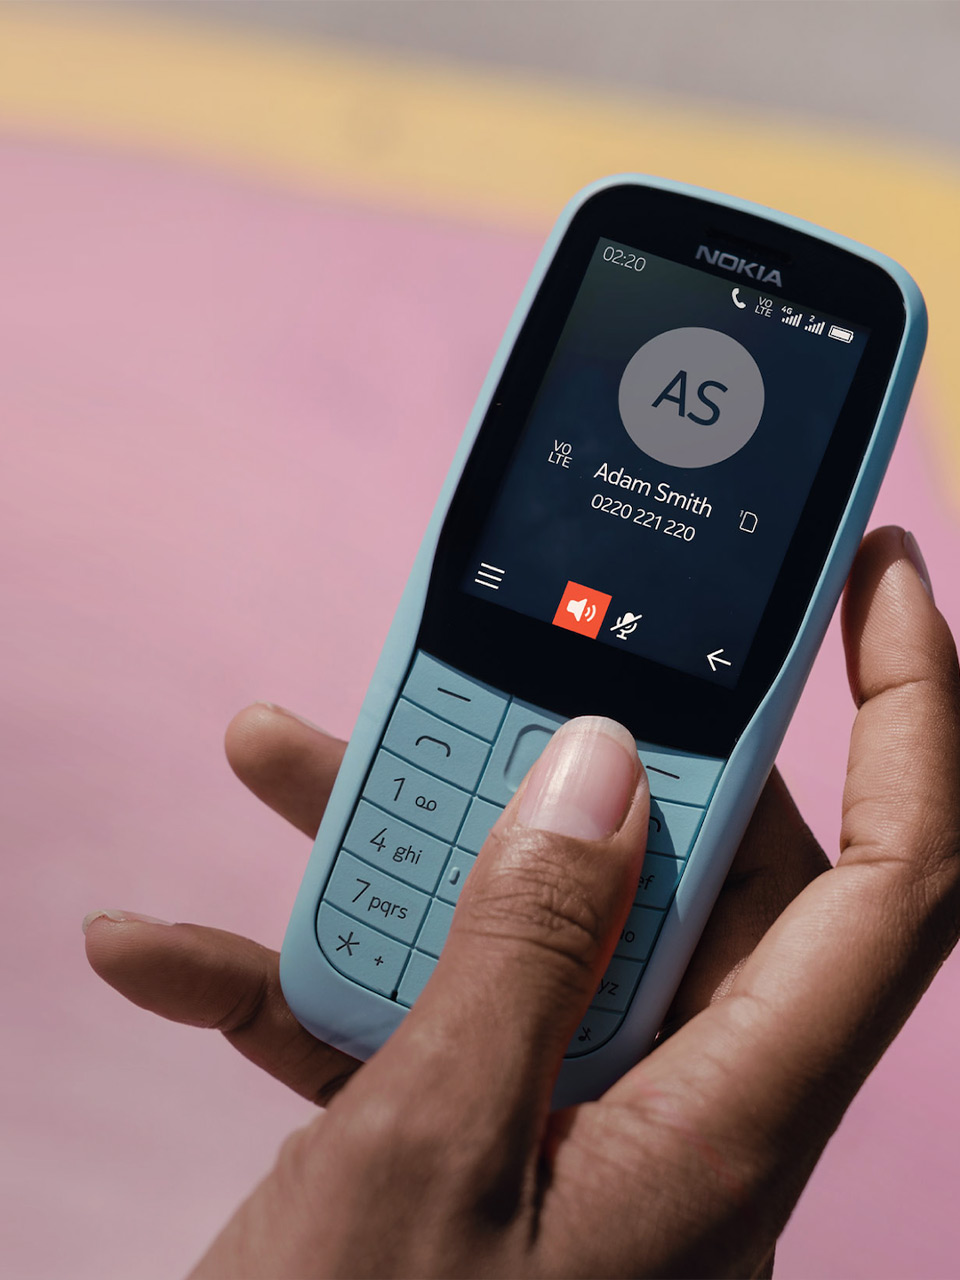 Nokia Mobile Phone New Model 2020